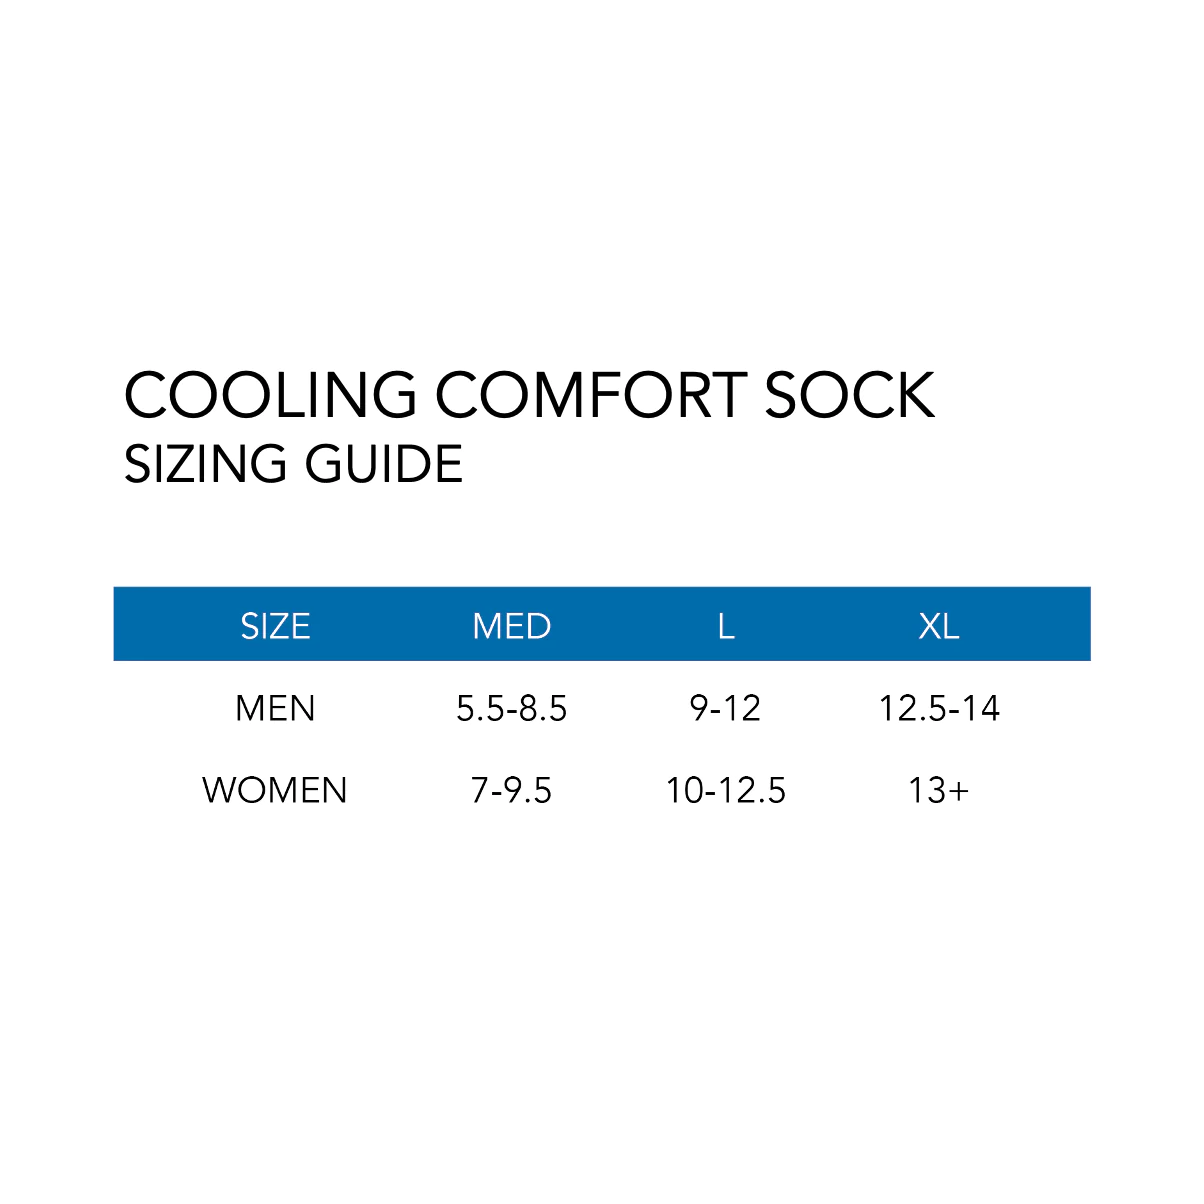 Cooling socks sizes